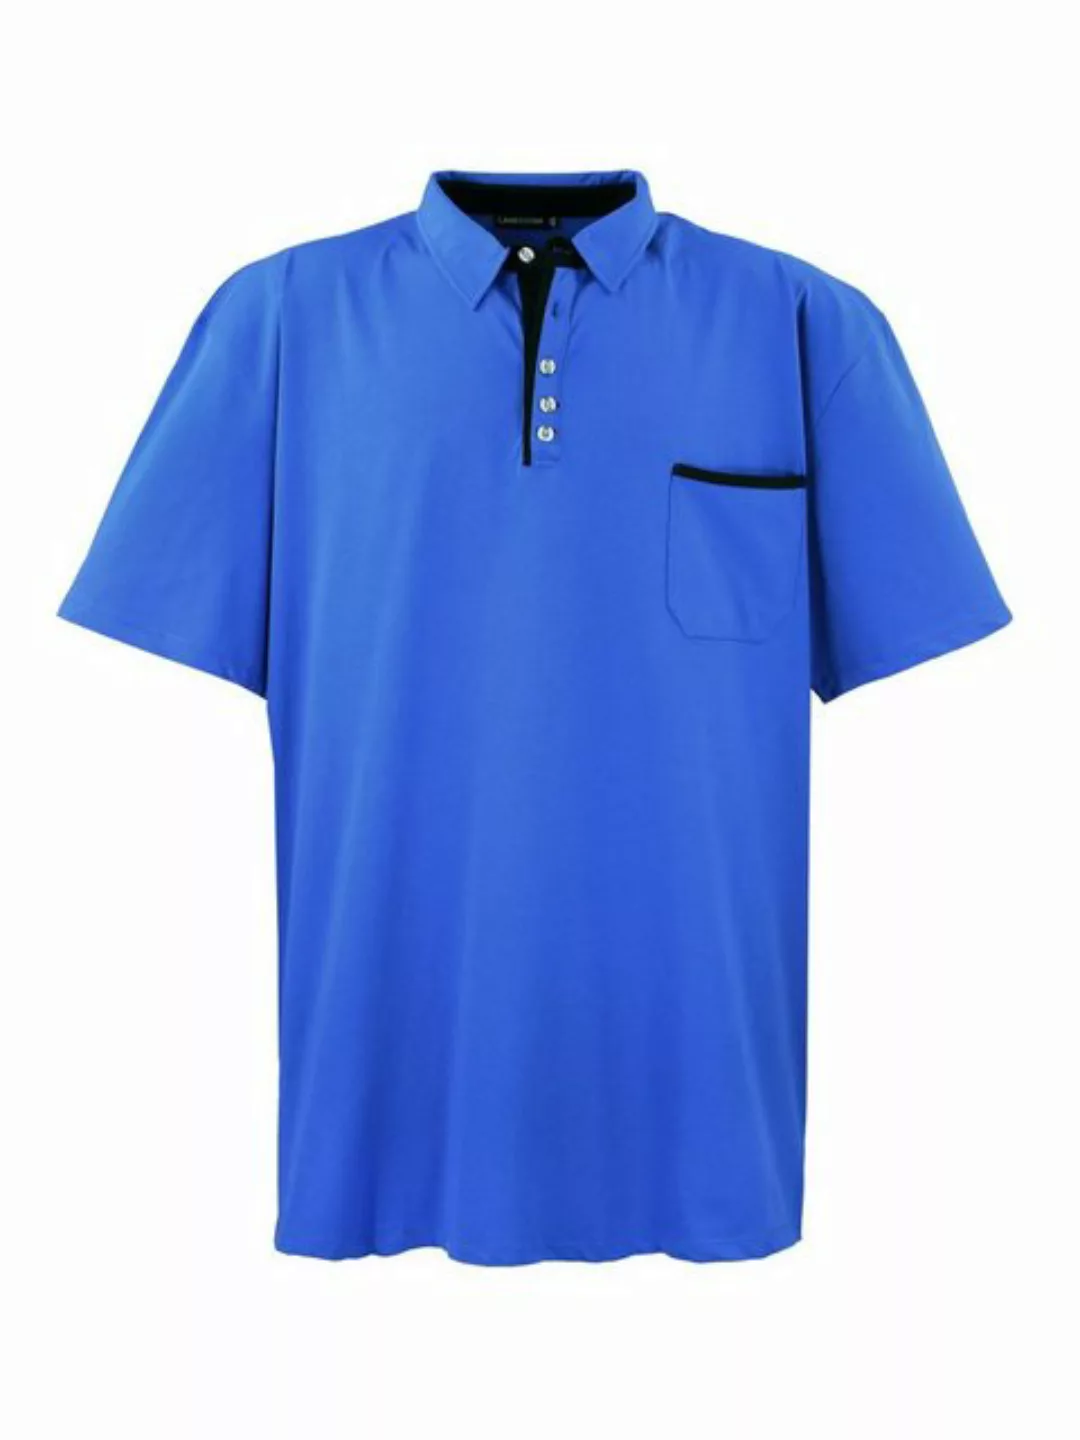 Lavecchia Poloshirt Übergrößen Herren Polo Shirt LV-1701 Herren Polo Shirt günstig online kaufen